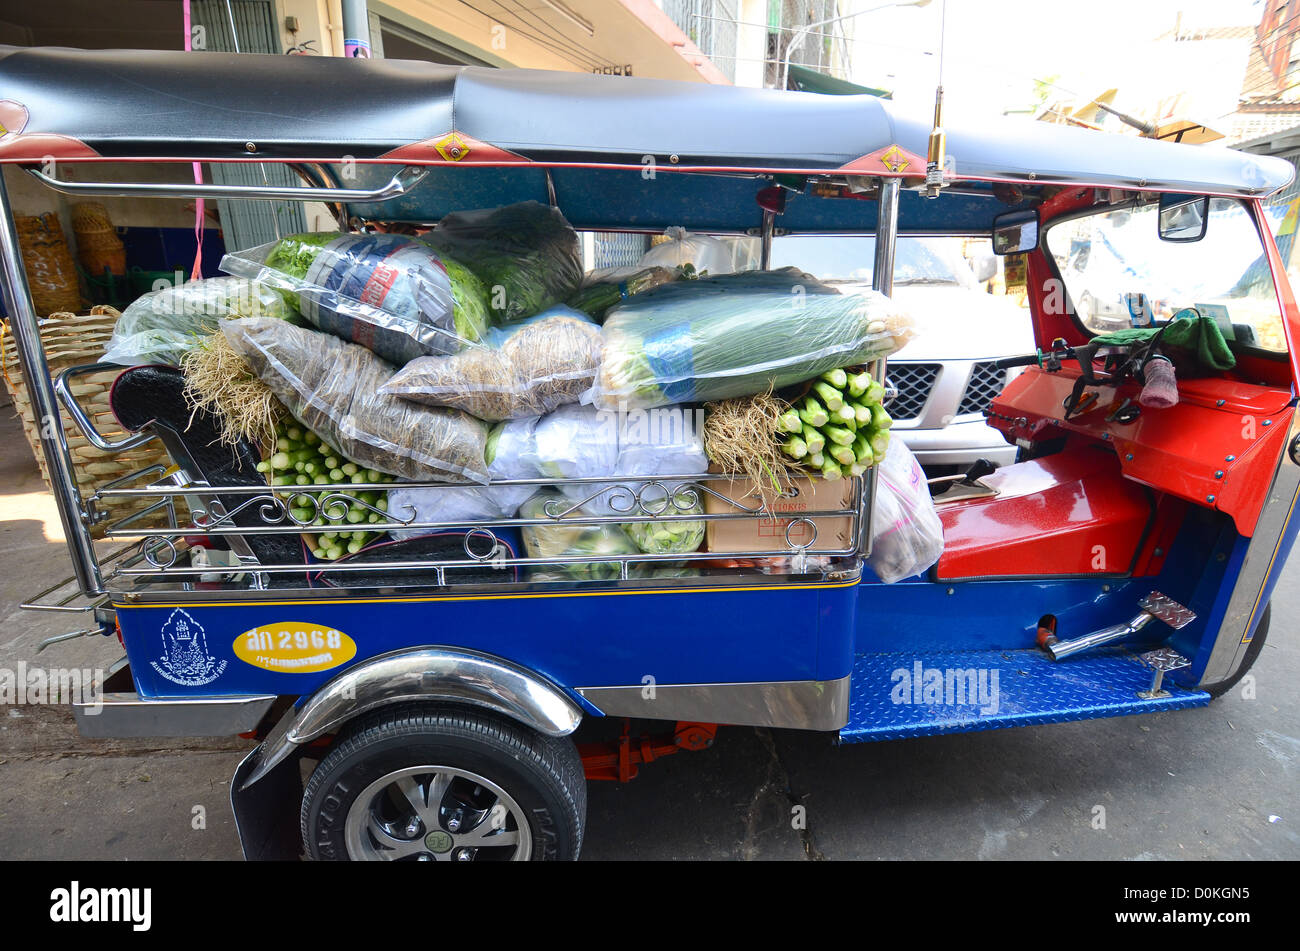 Un tuk-tuk à Bangkok chargé avec des légumes. Banque D'Images